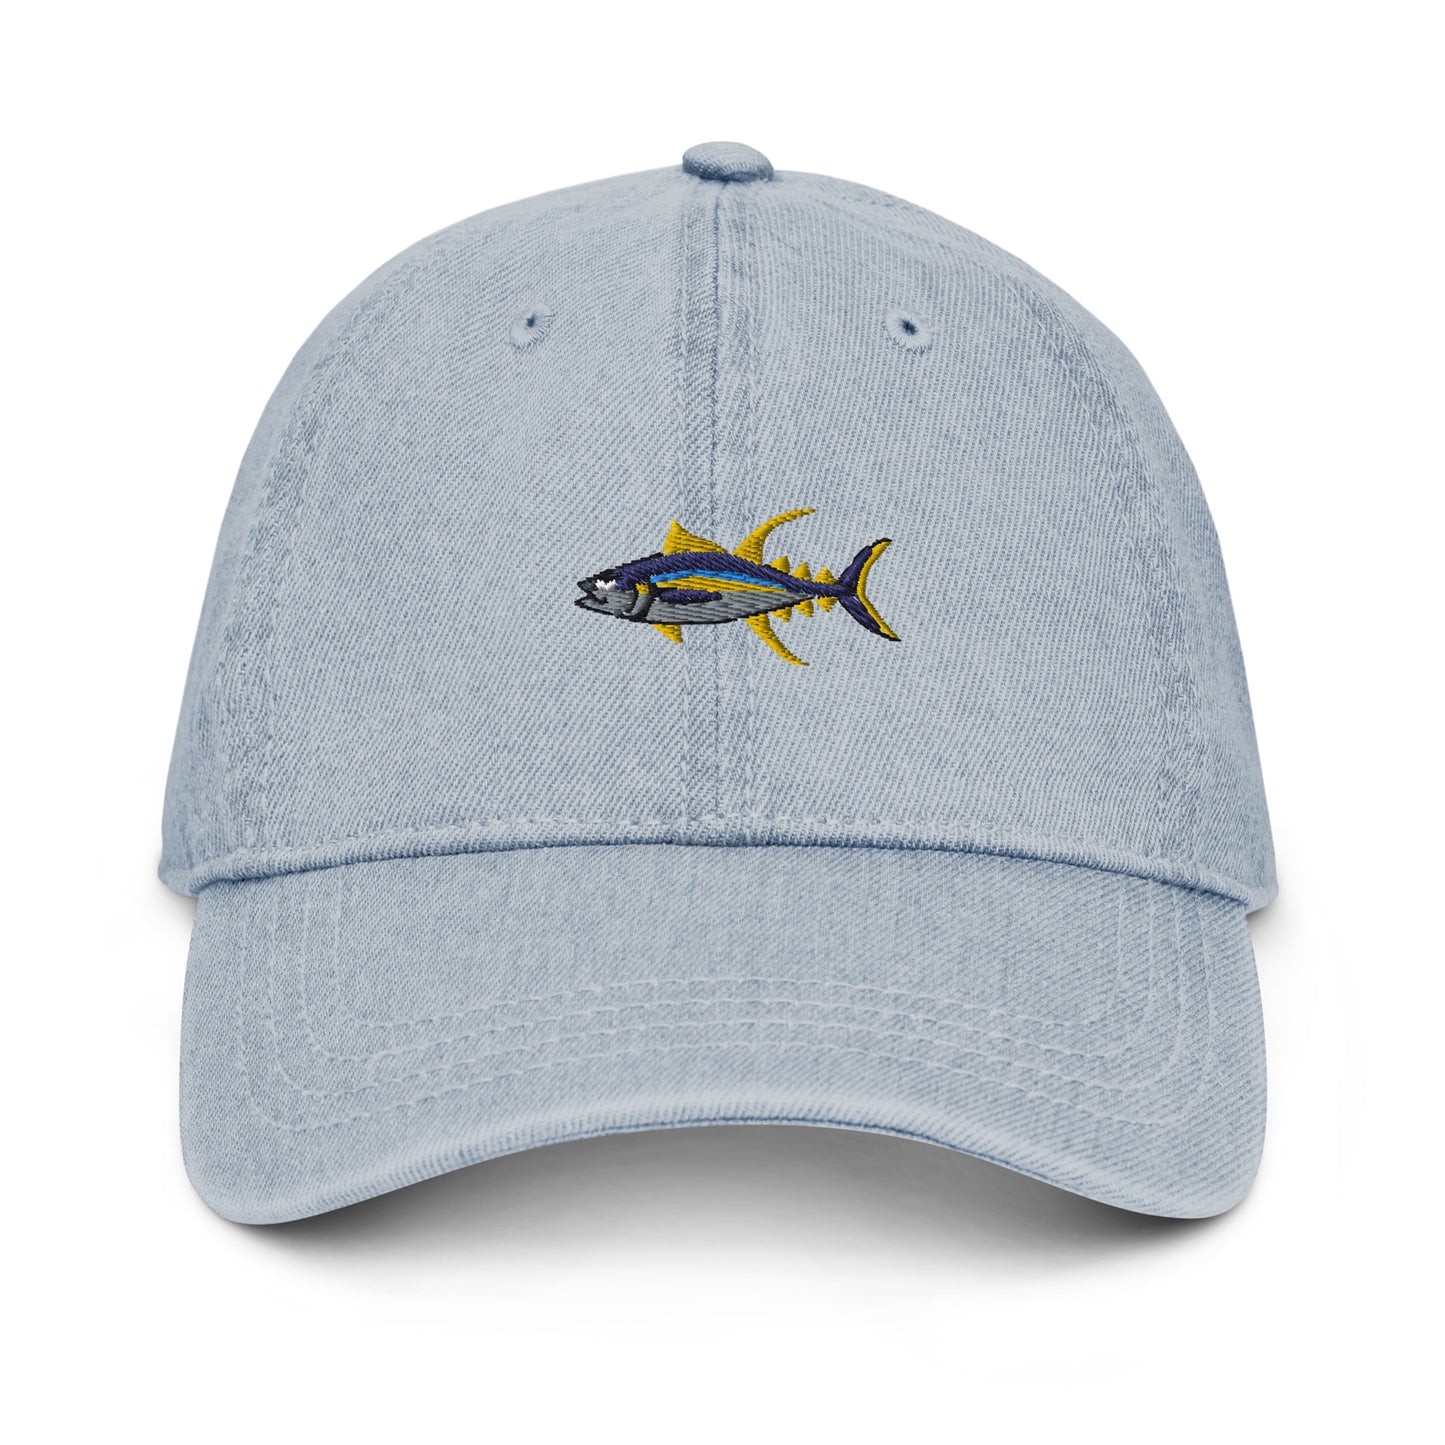 L.L. Bean Fishing Hat Boys Large Blue Cotton Topstitch Yellow Fish